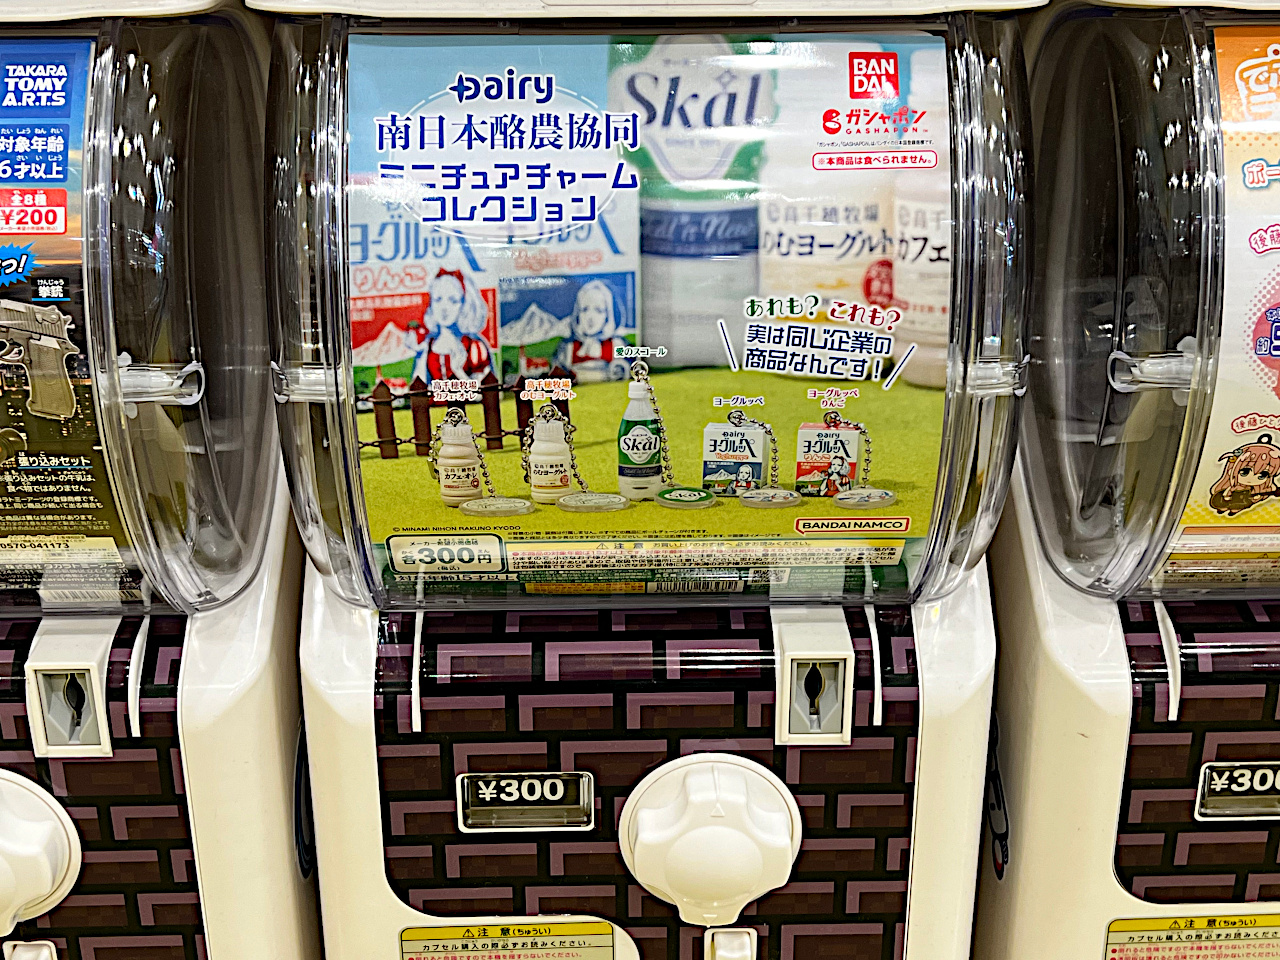 「Dairy南日本酪農協同 ミニチュアチャームコレクション」の自販機